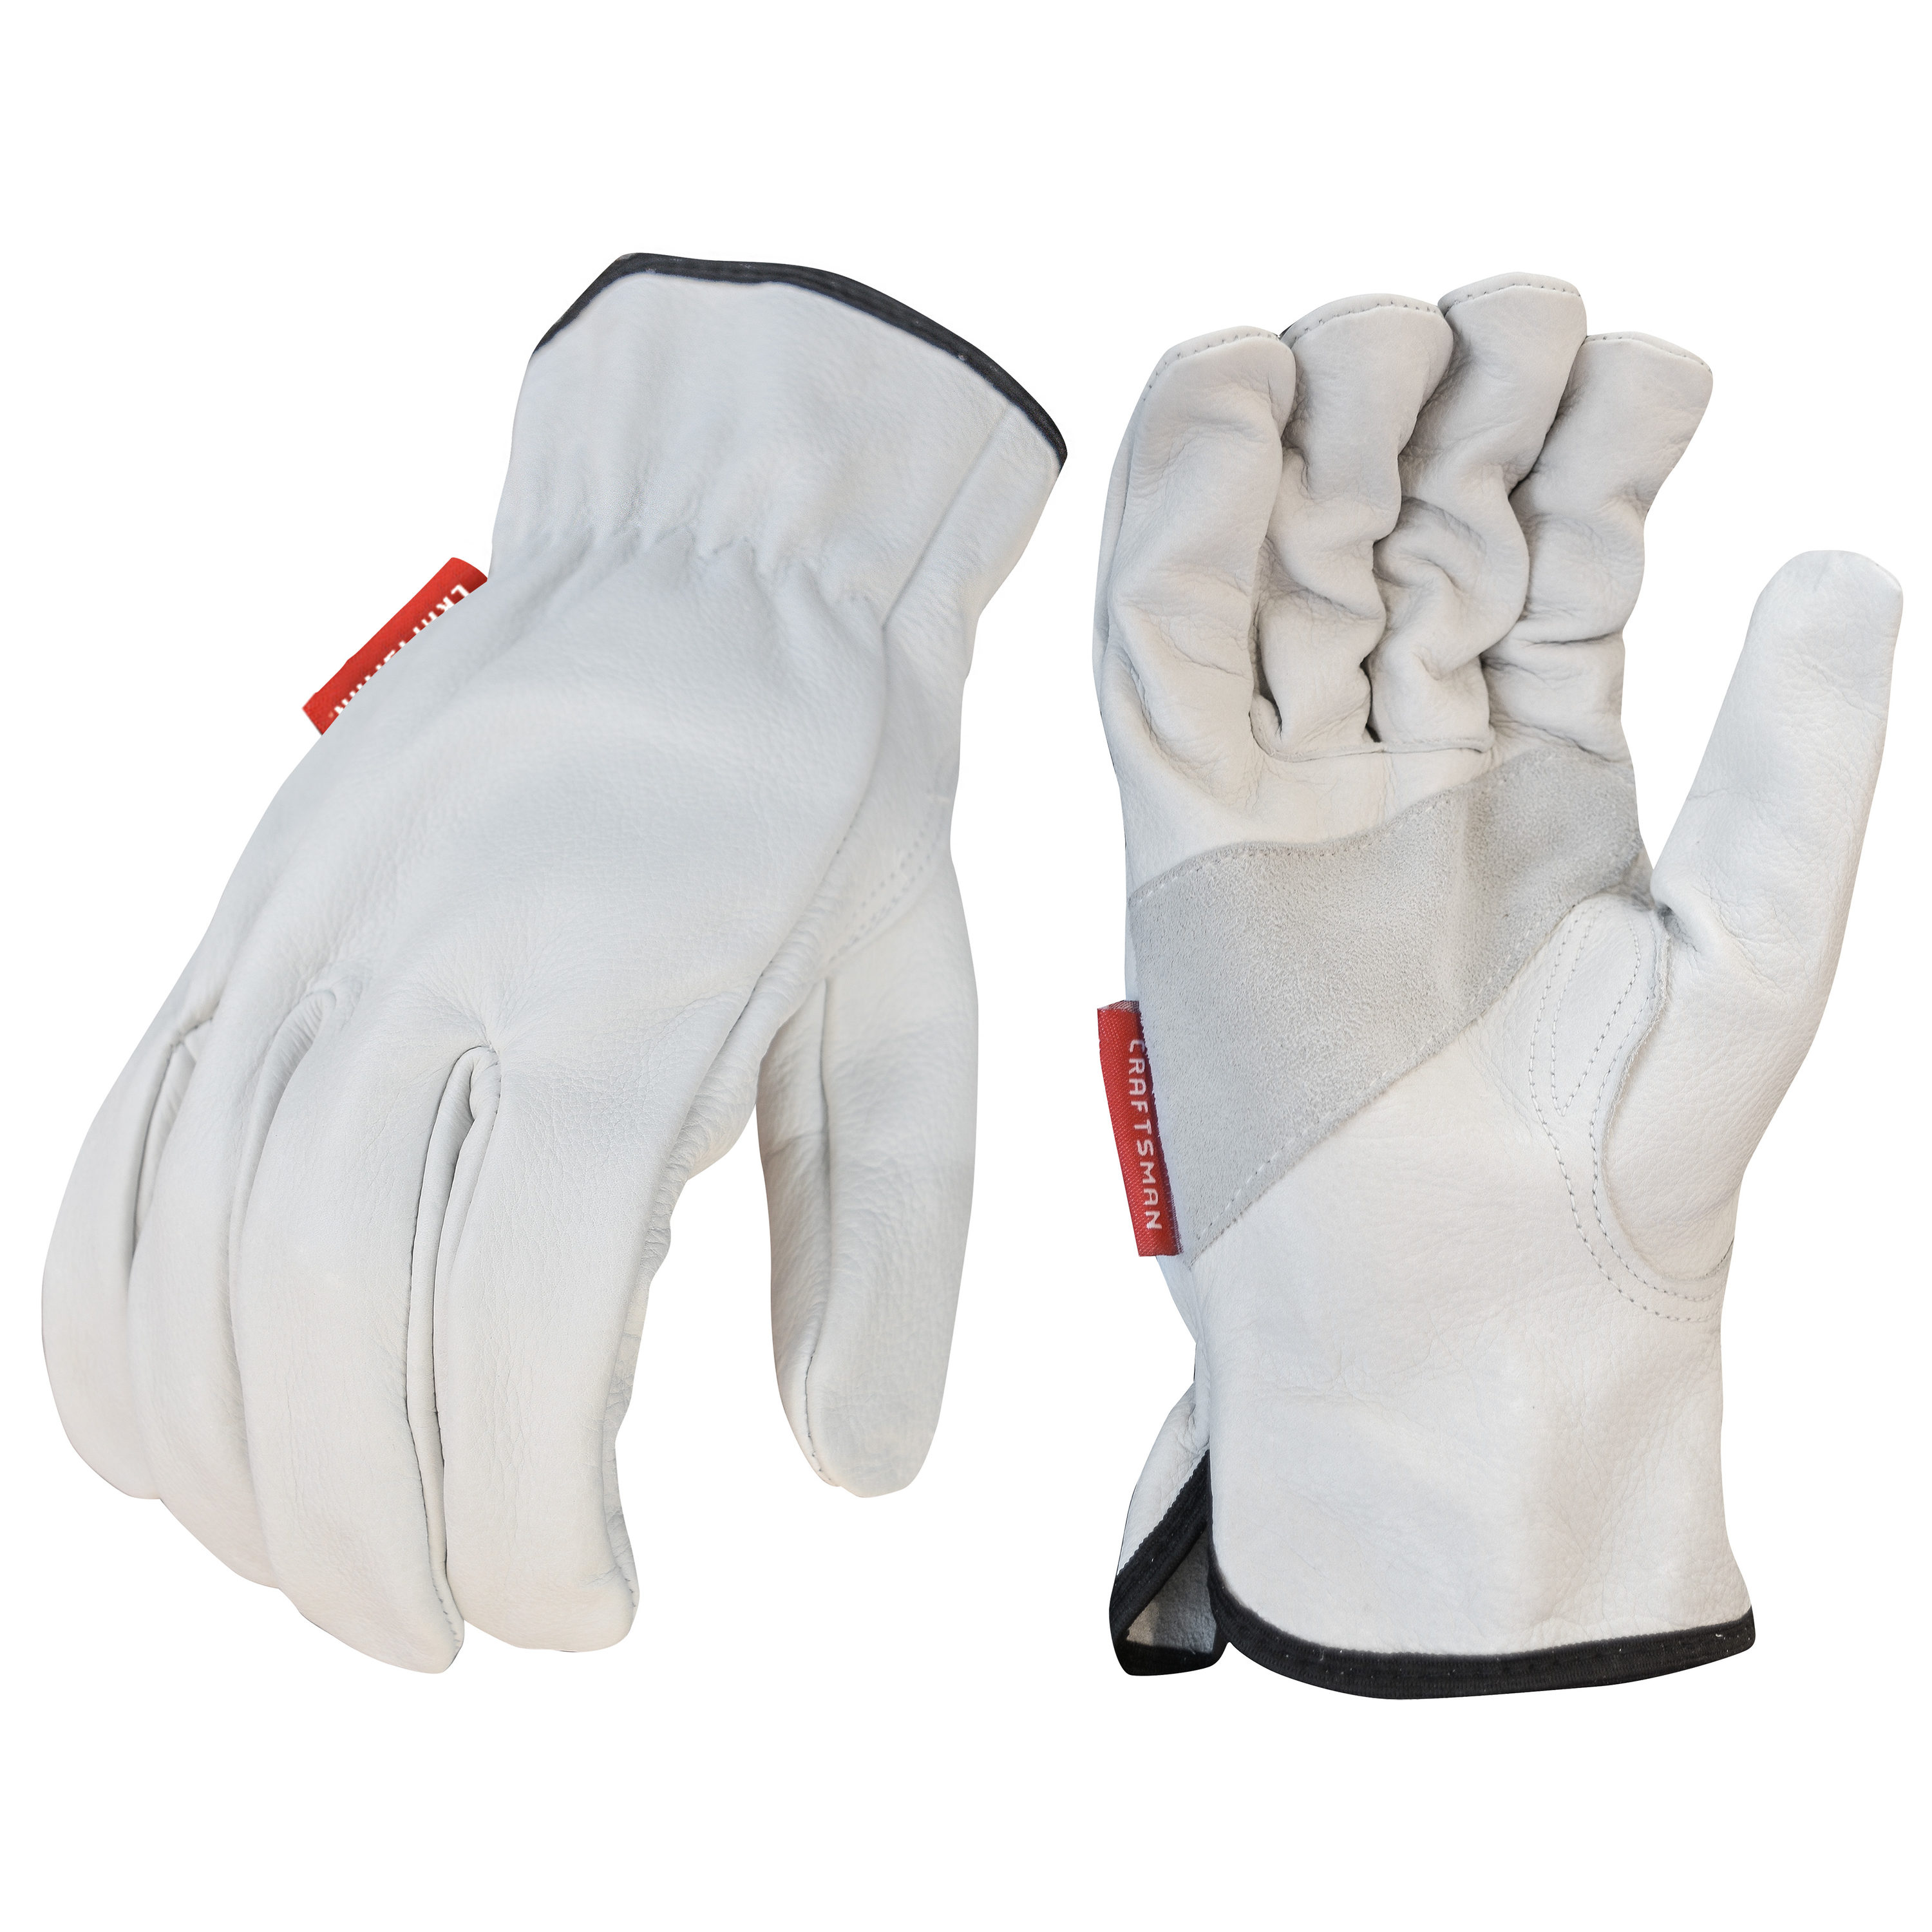 Leather Working Glove Men's Work Cowhide Non-Slip Gloves with Elastic Wrist 